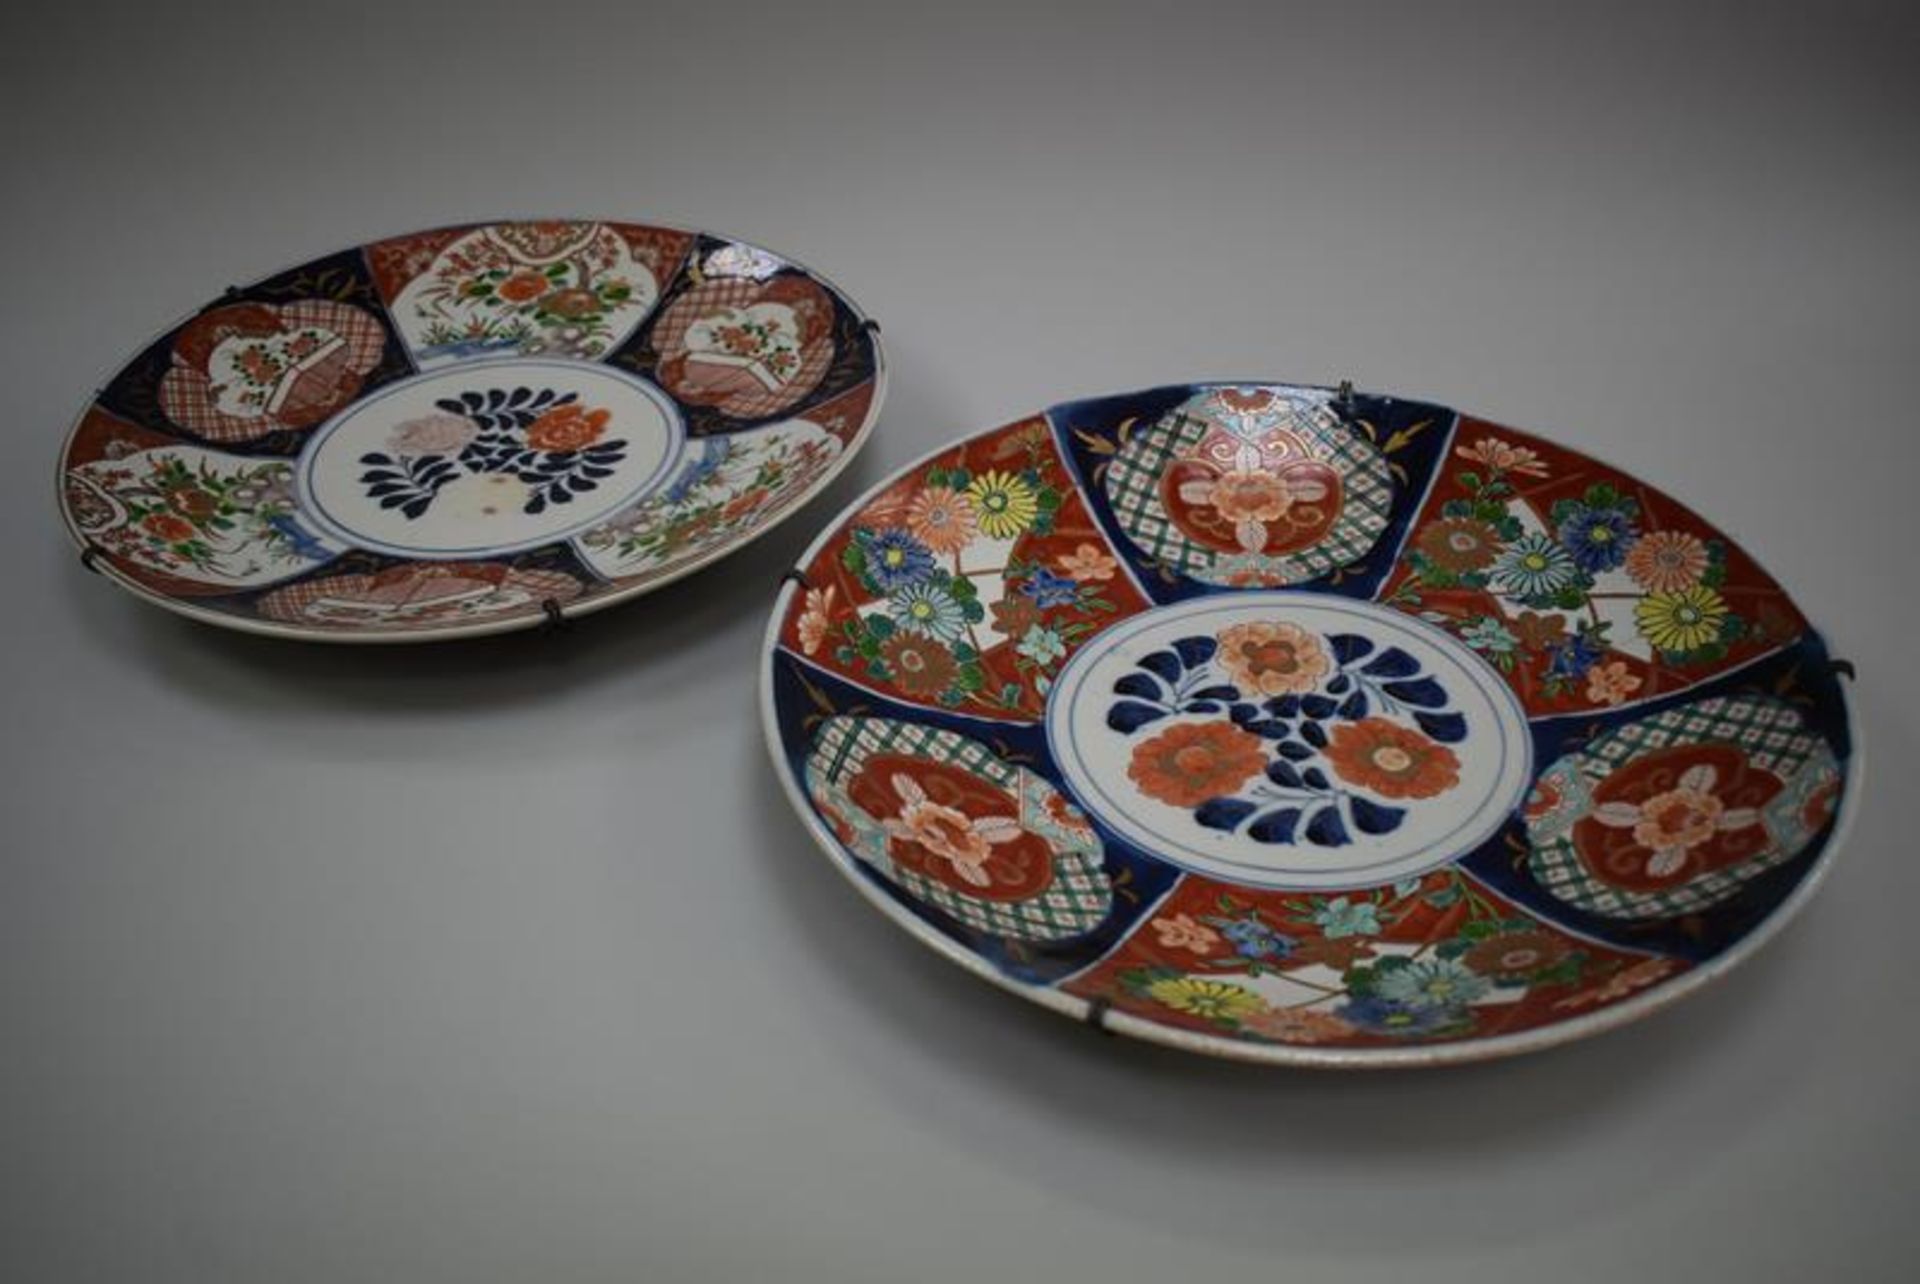 2 Japanische Imari Keramik Teller um 1880Mindestpreis 150Bezeichnung 2 Japanische Imari Keramik